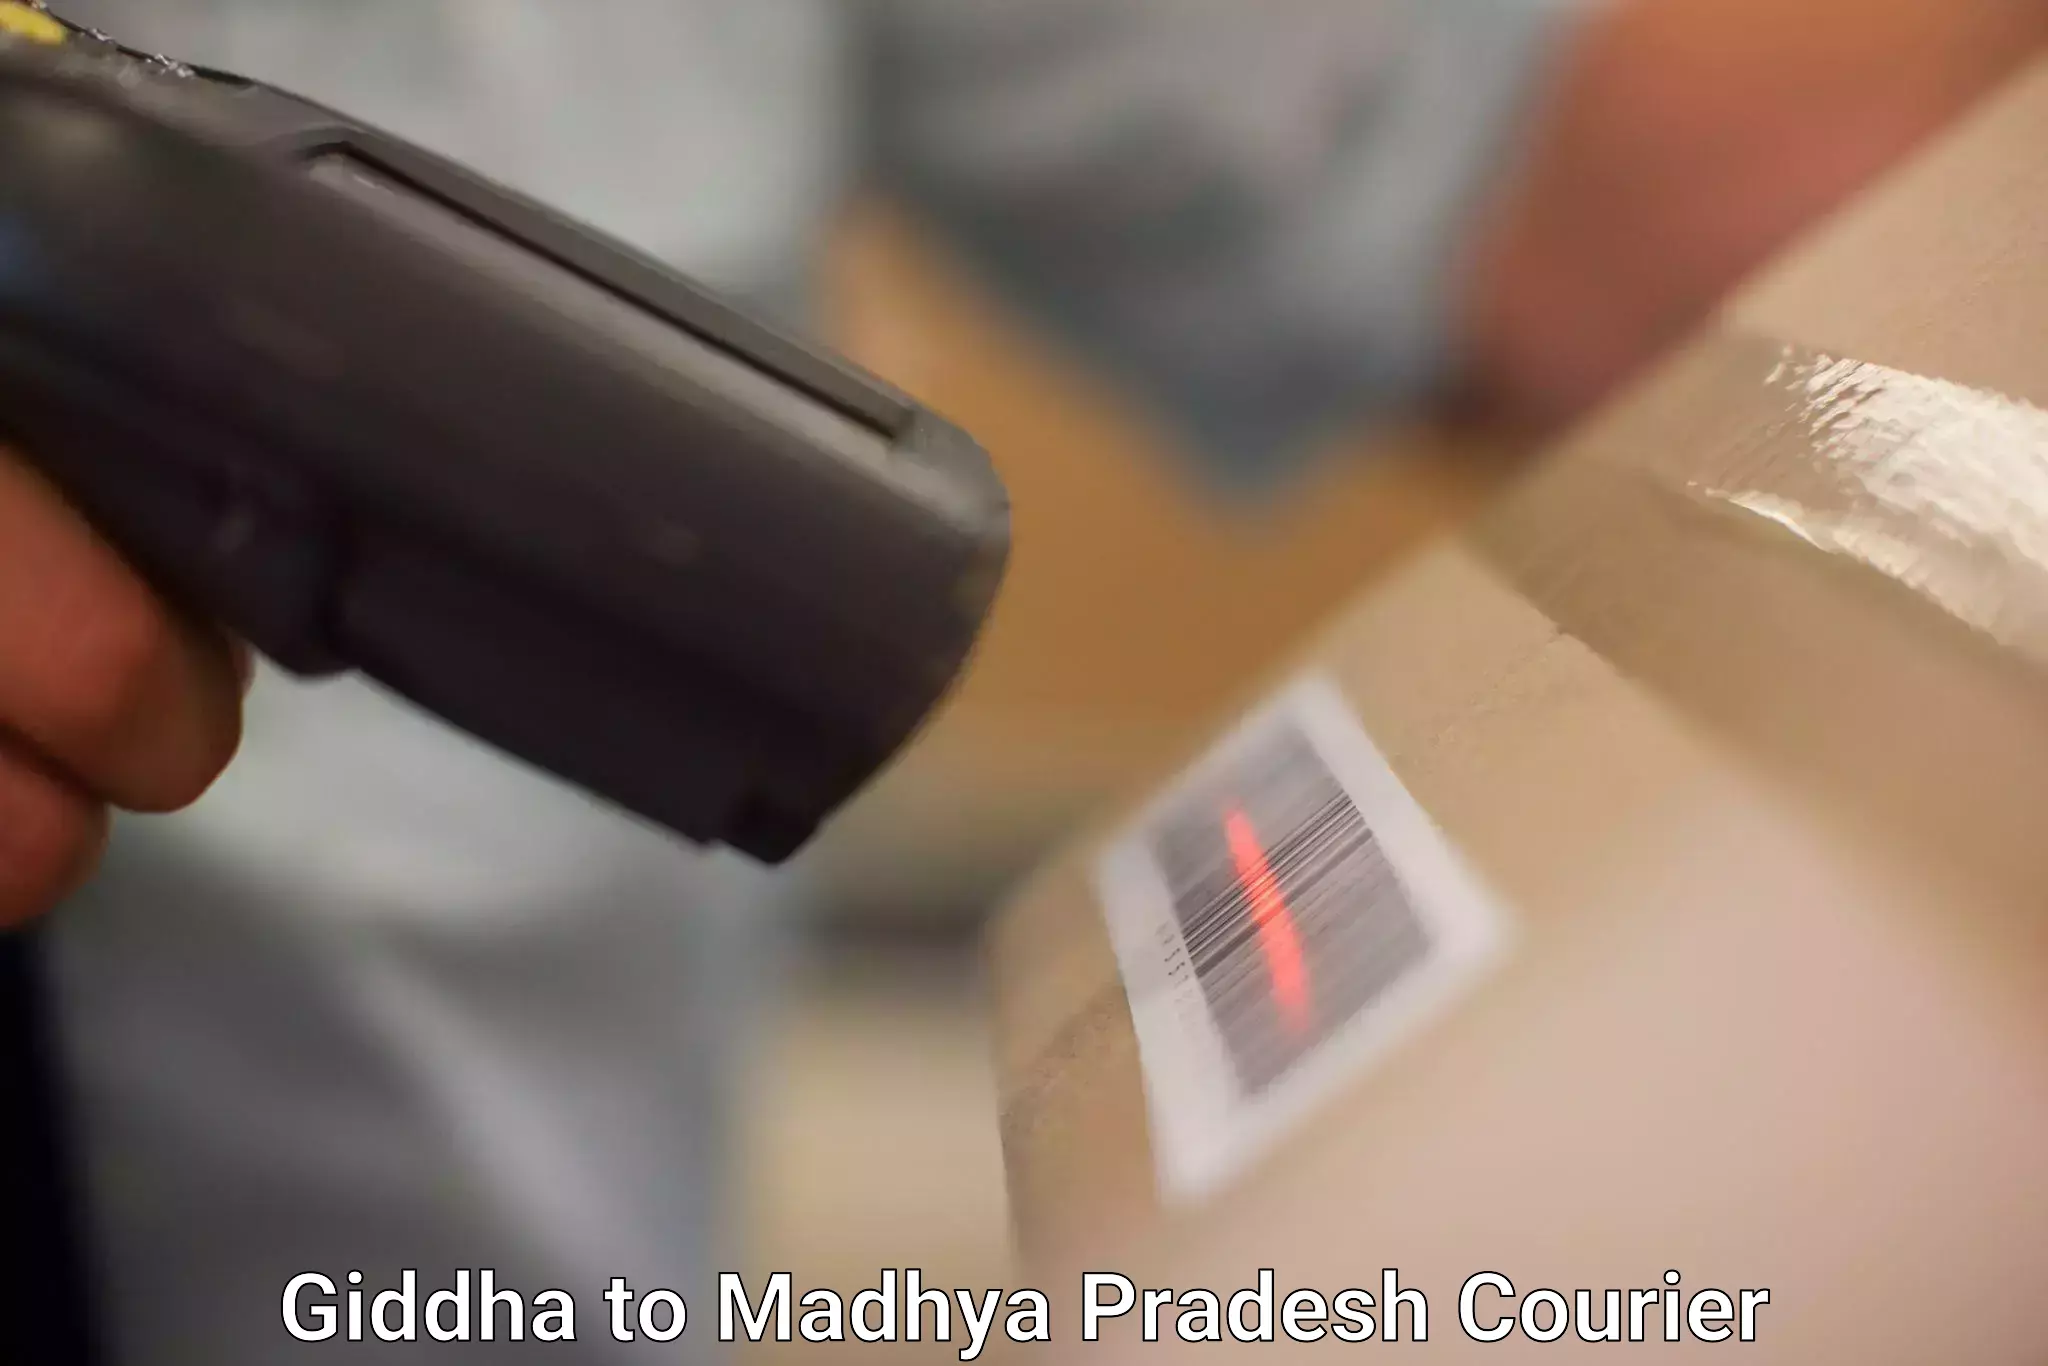 Efficient cargo handling Giddha to Bhopal